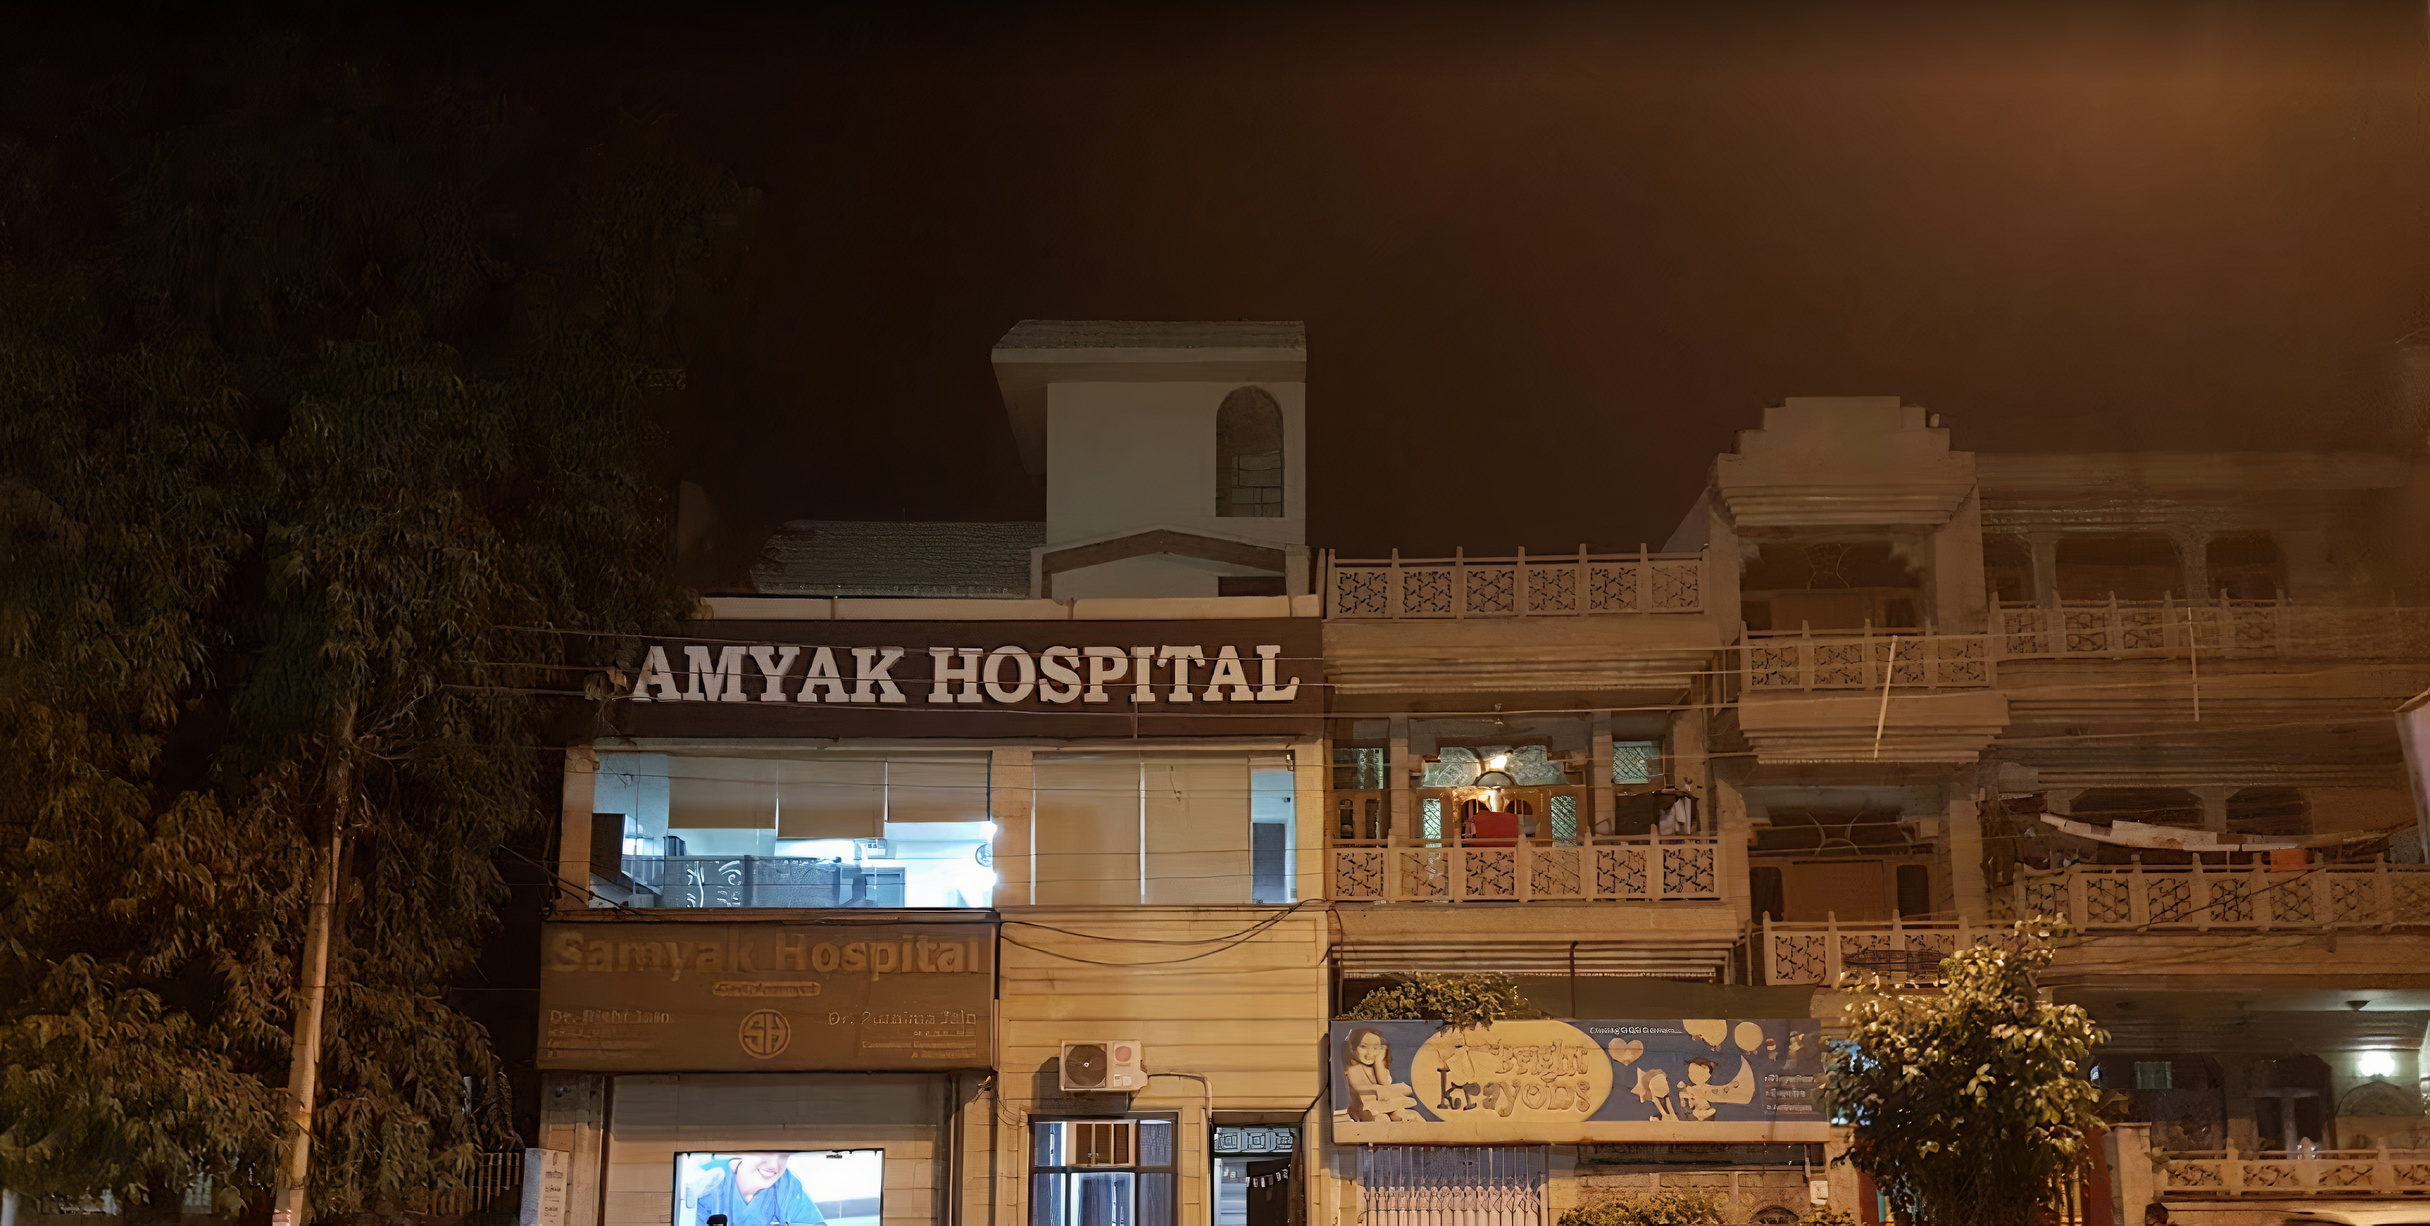 Samyak Hospital-photo